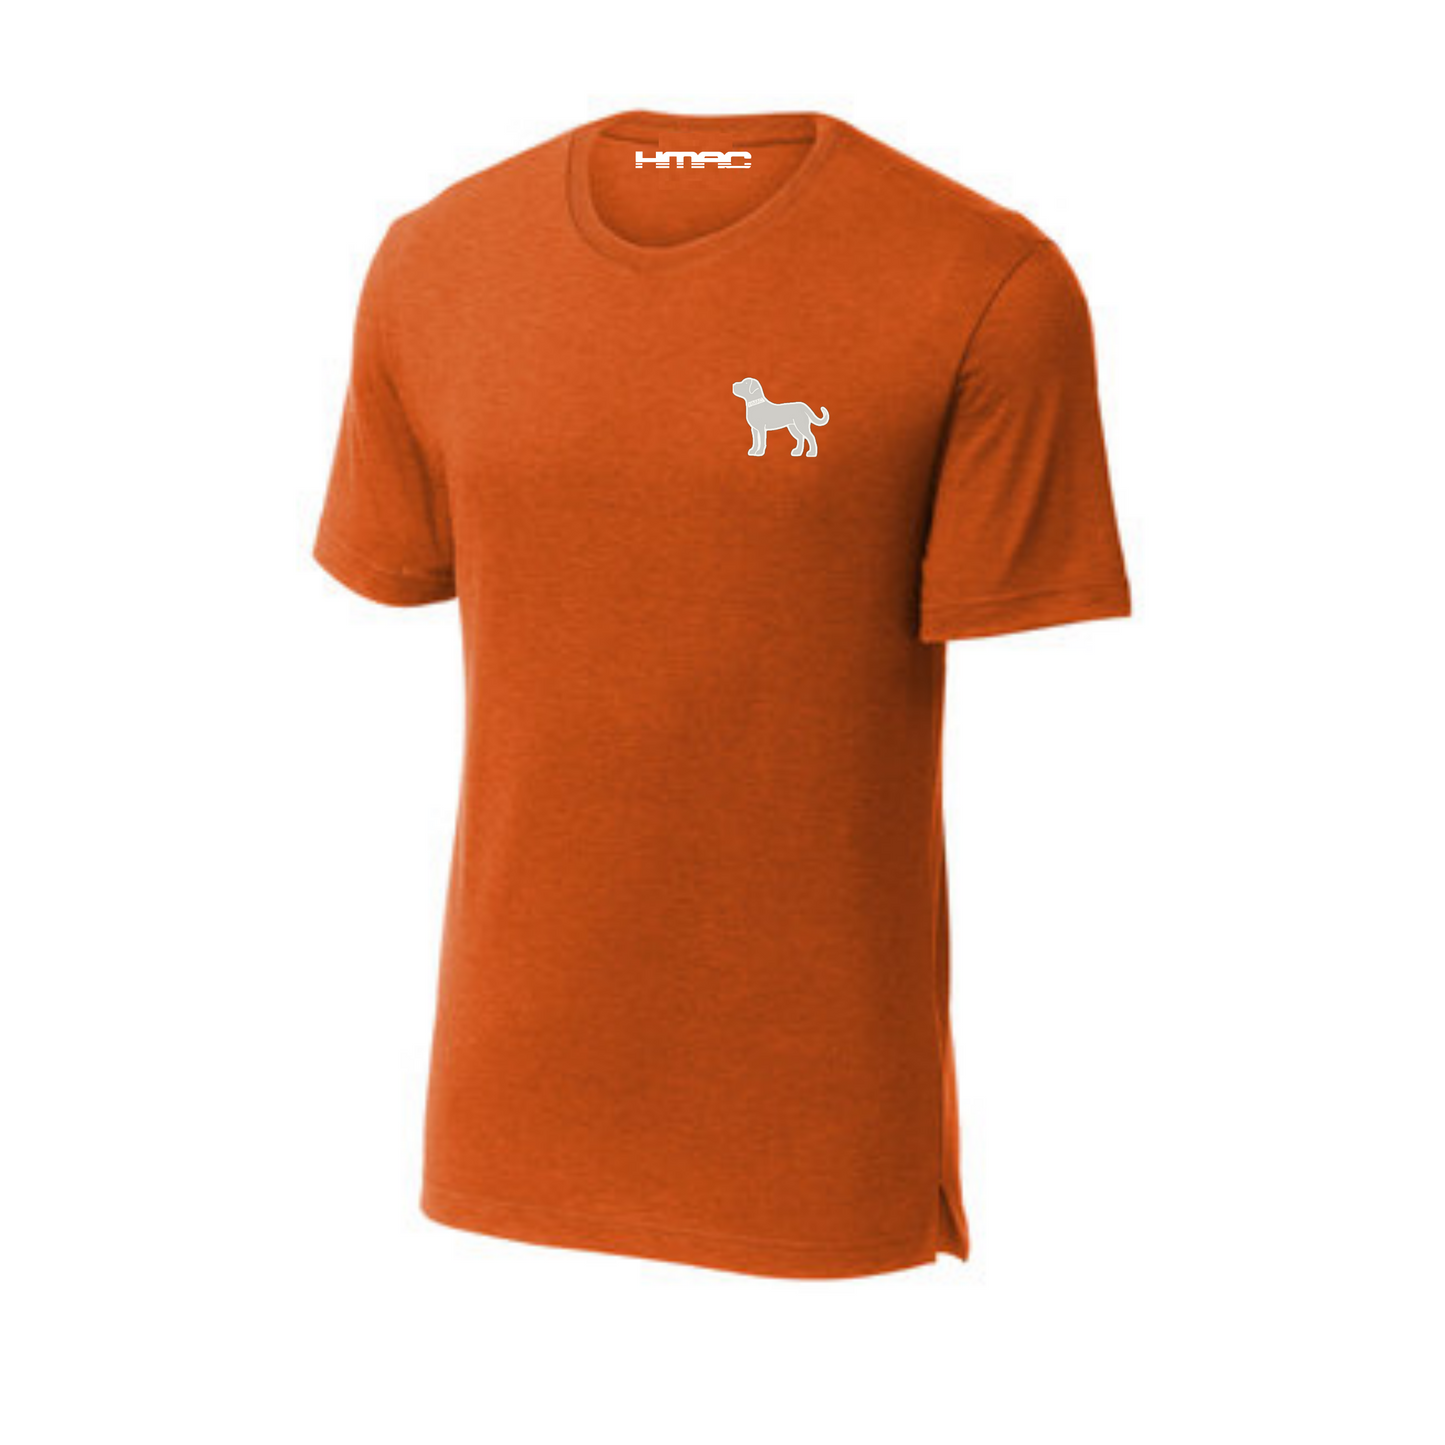 Hugh McLean Range Dog Performance T-Shirt